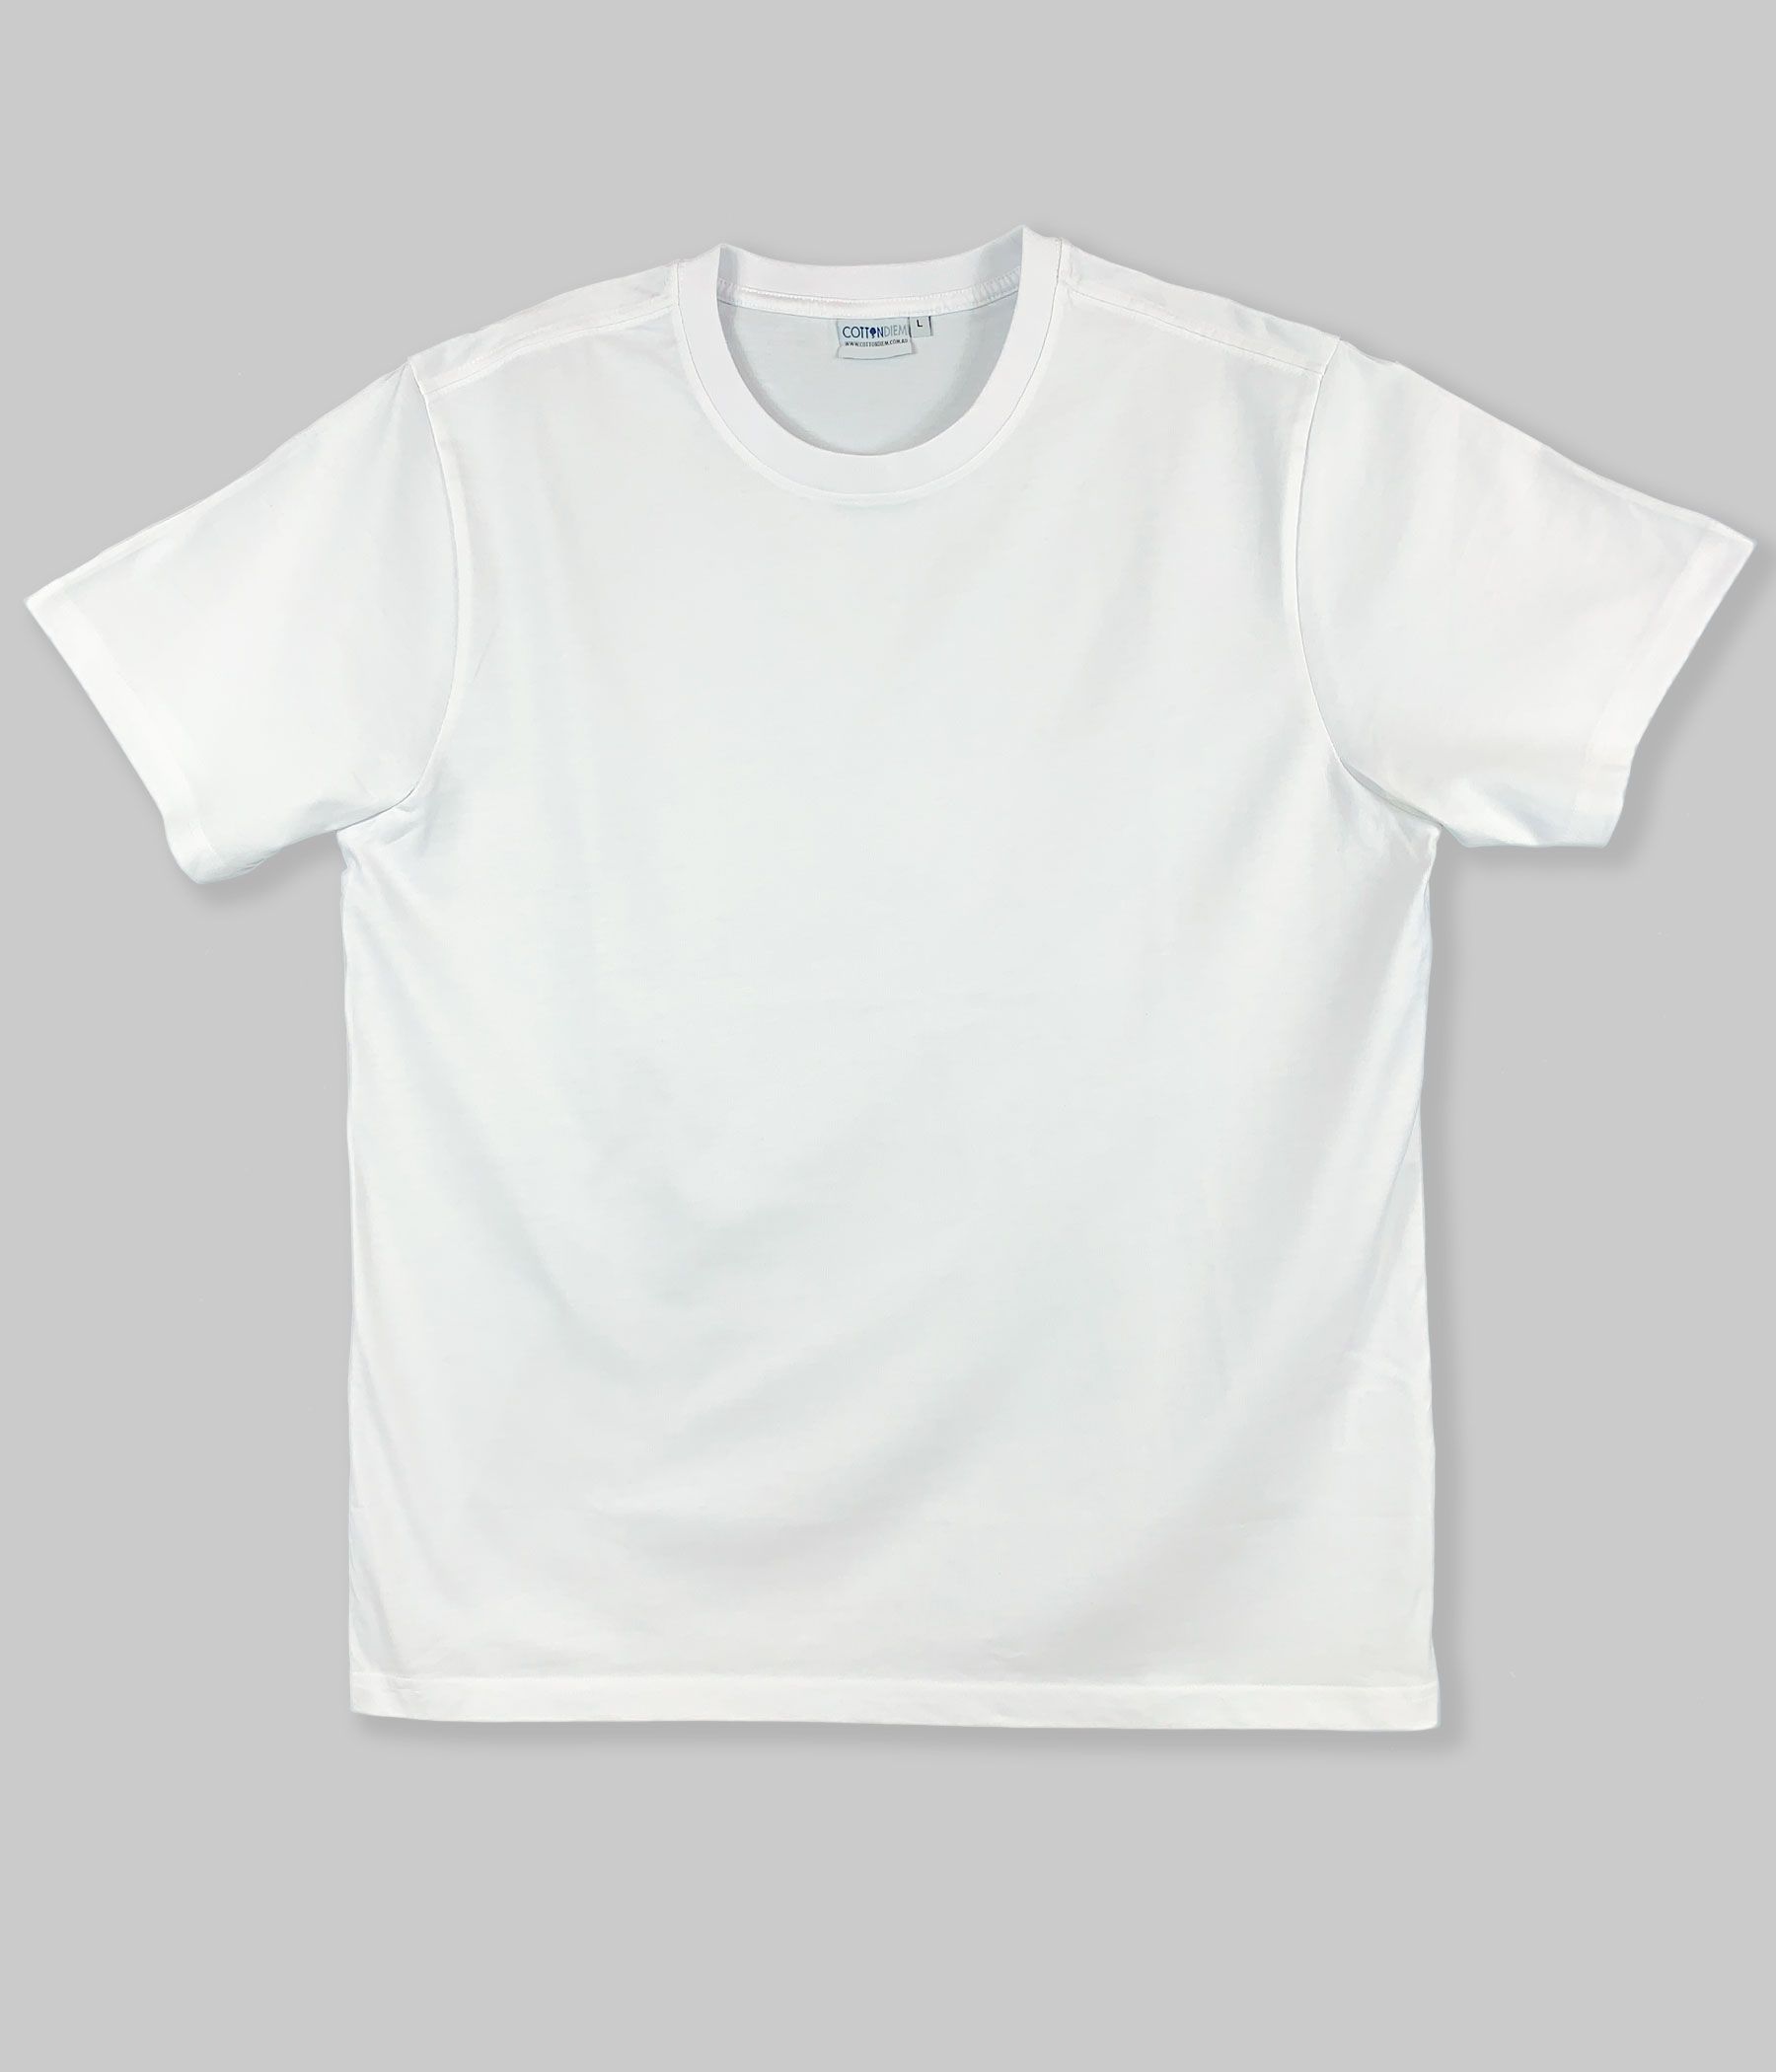 blank-plain-white-t-shirts-200-gsm